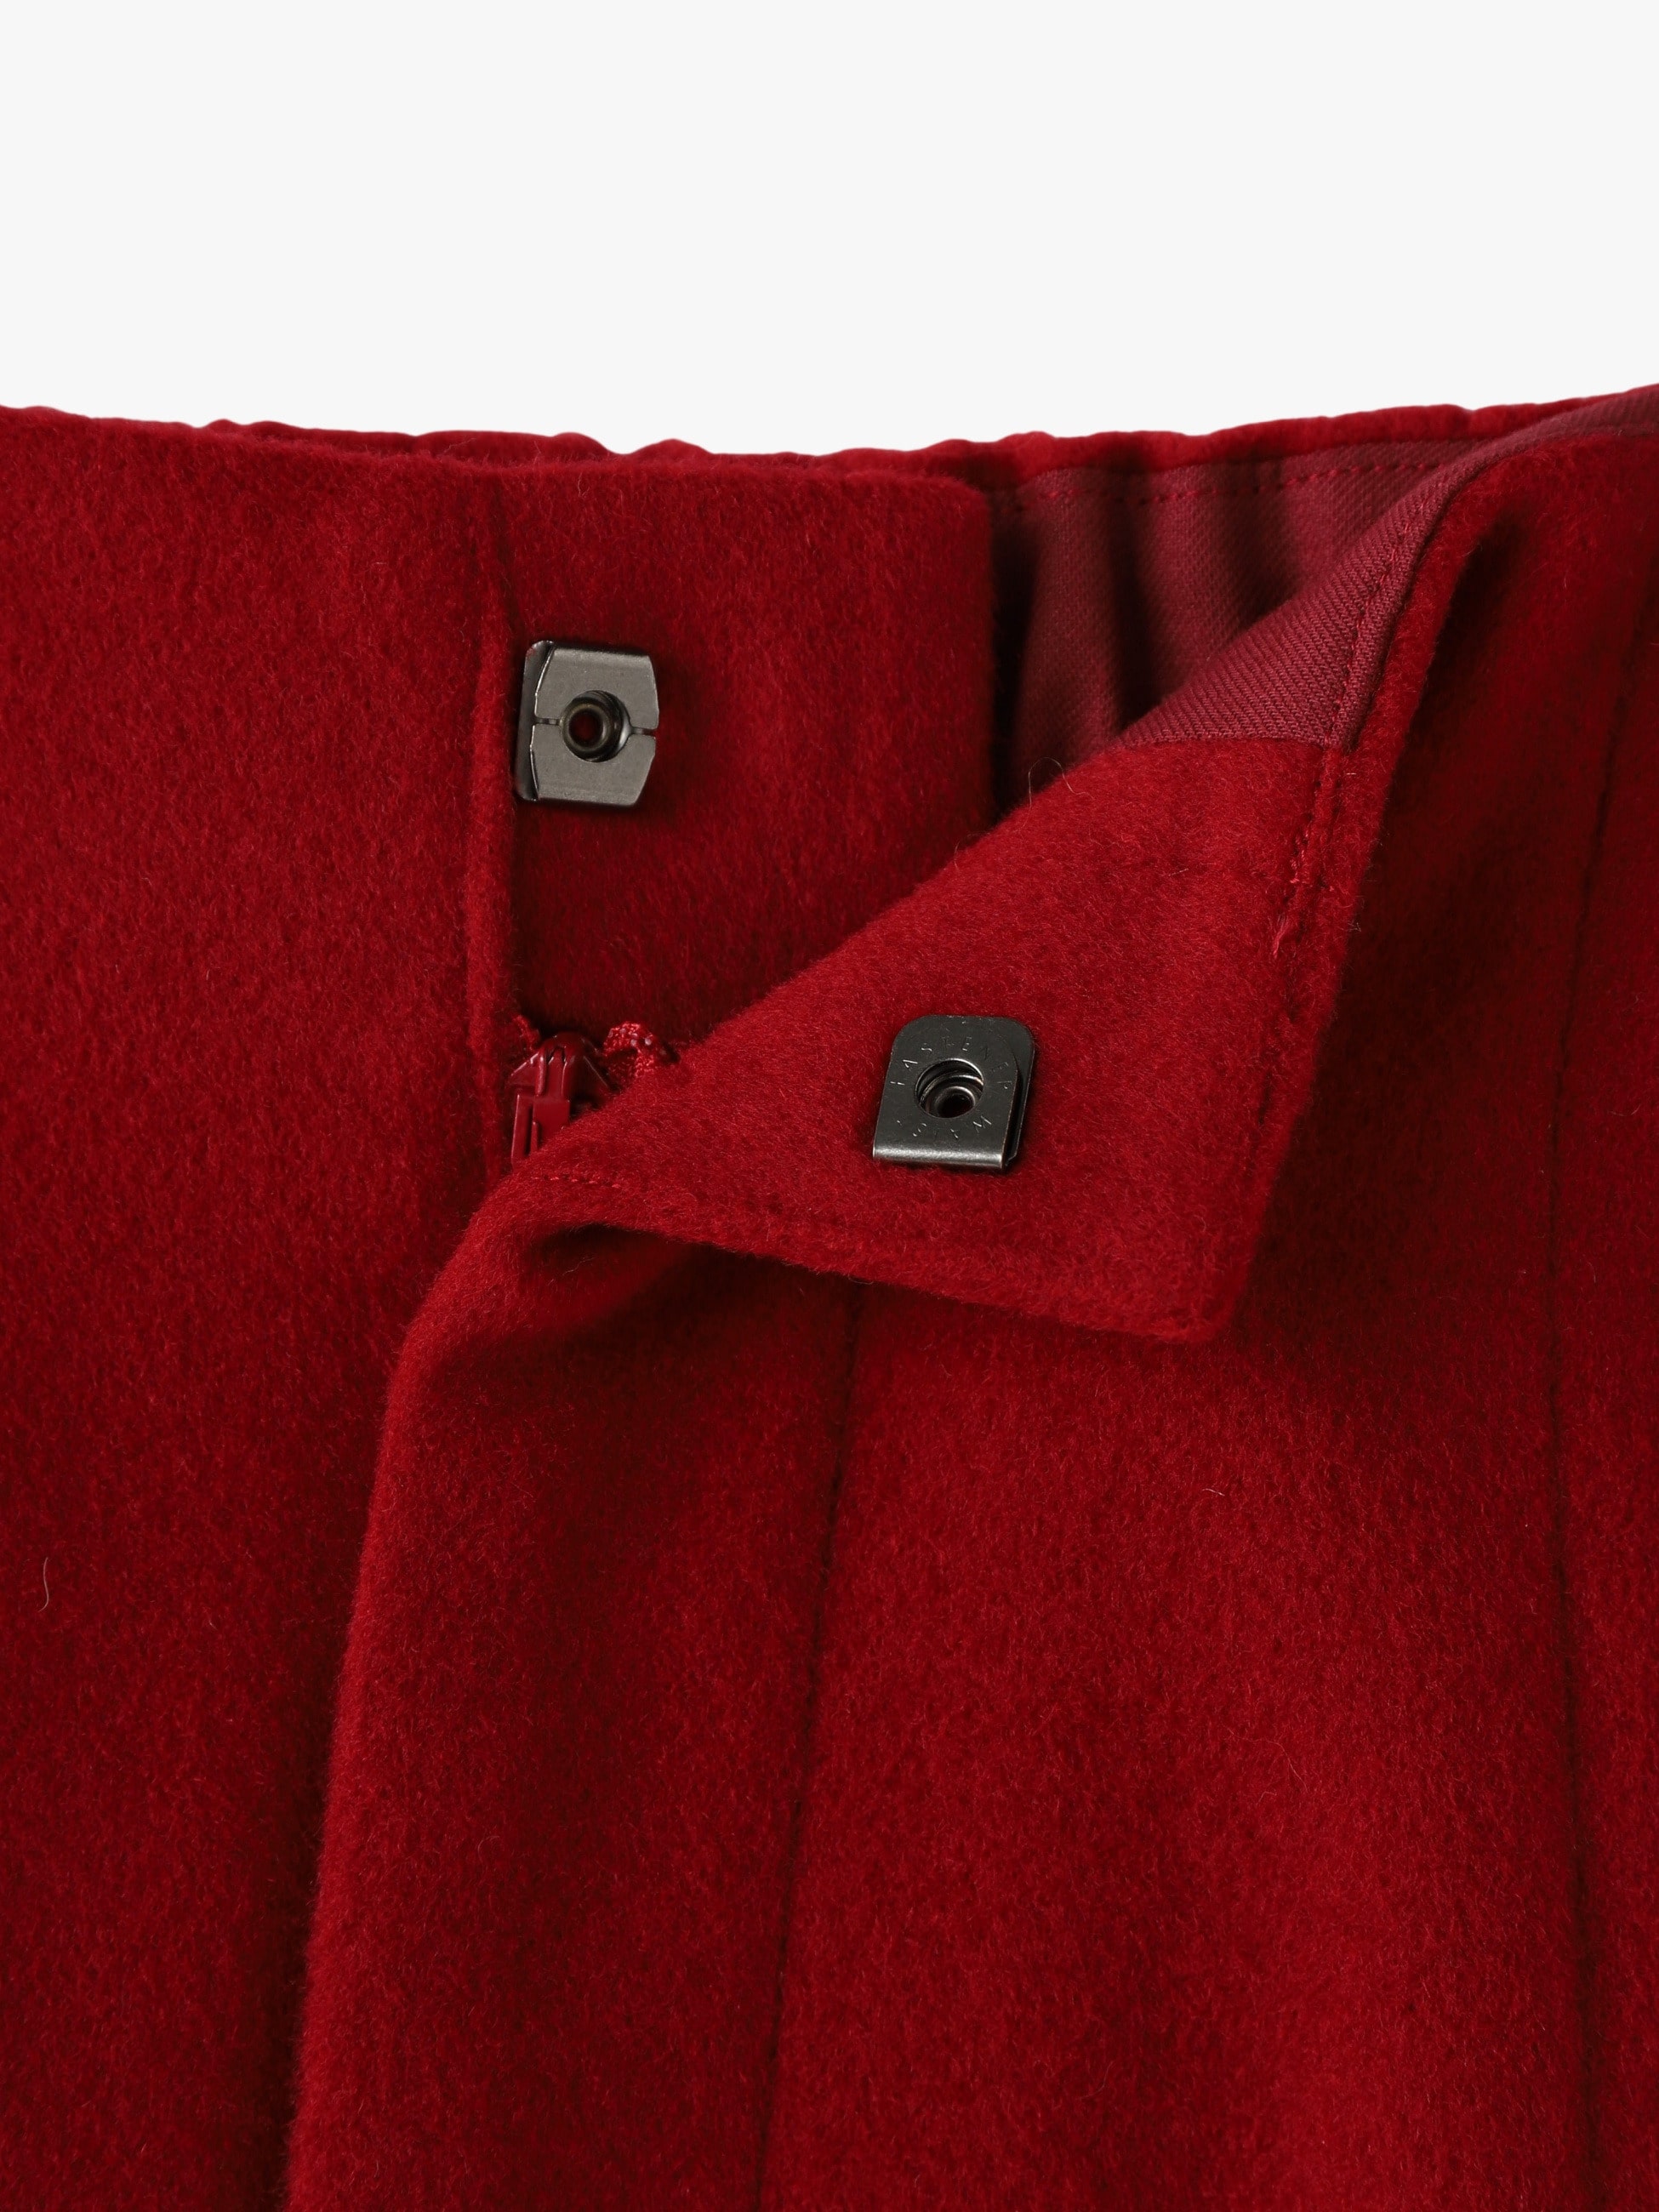 UNION LAUNCH High Waist Skirt (red)新品未使用